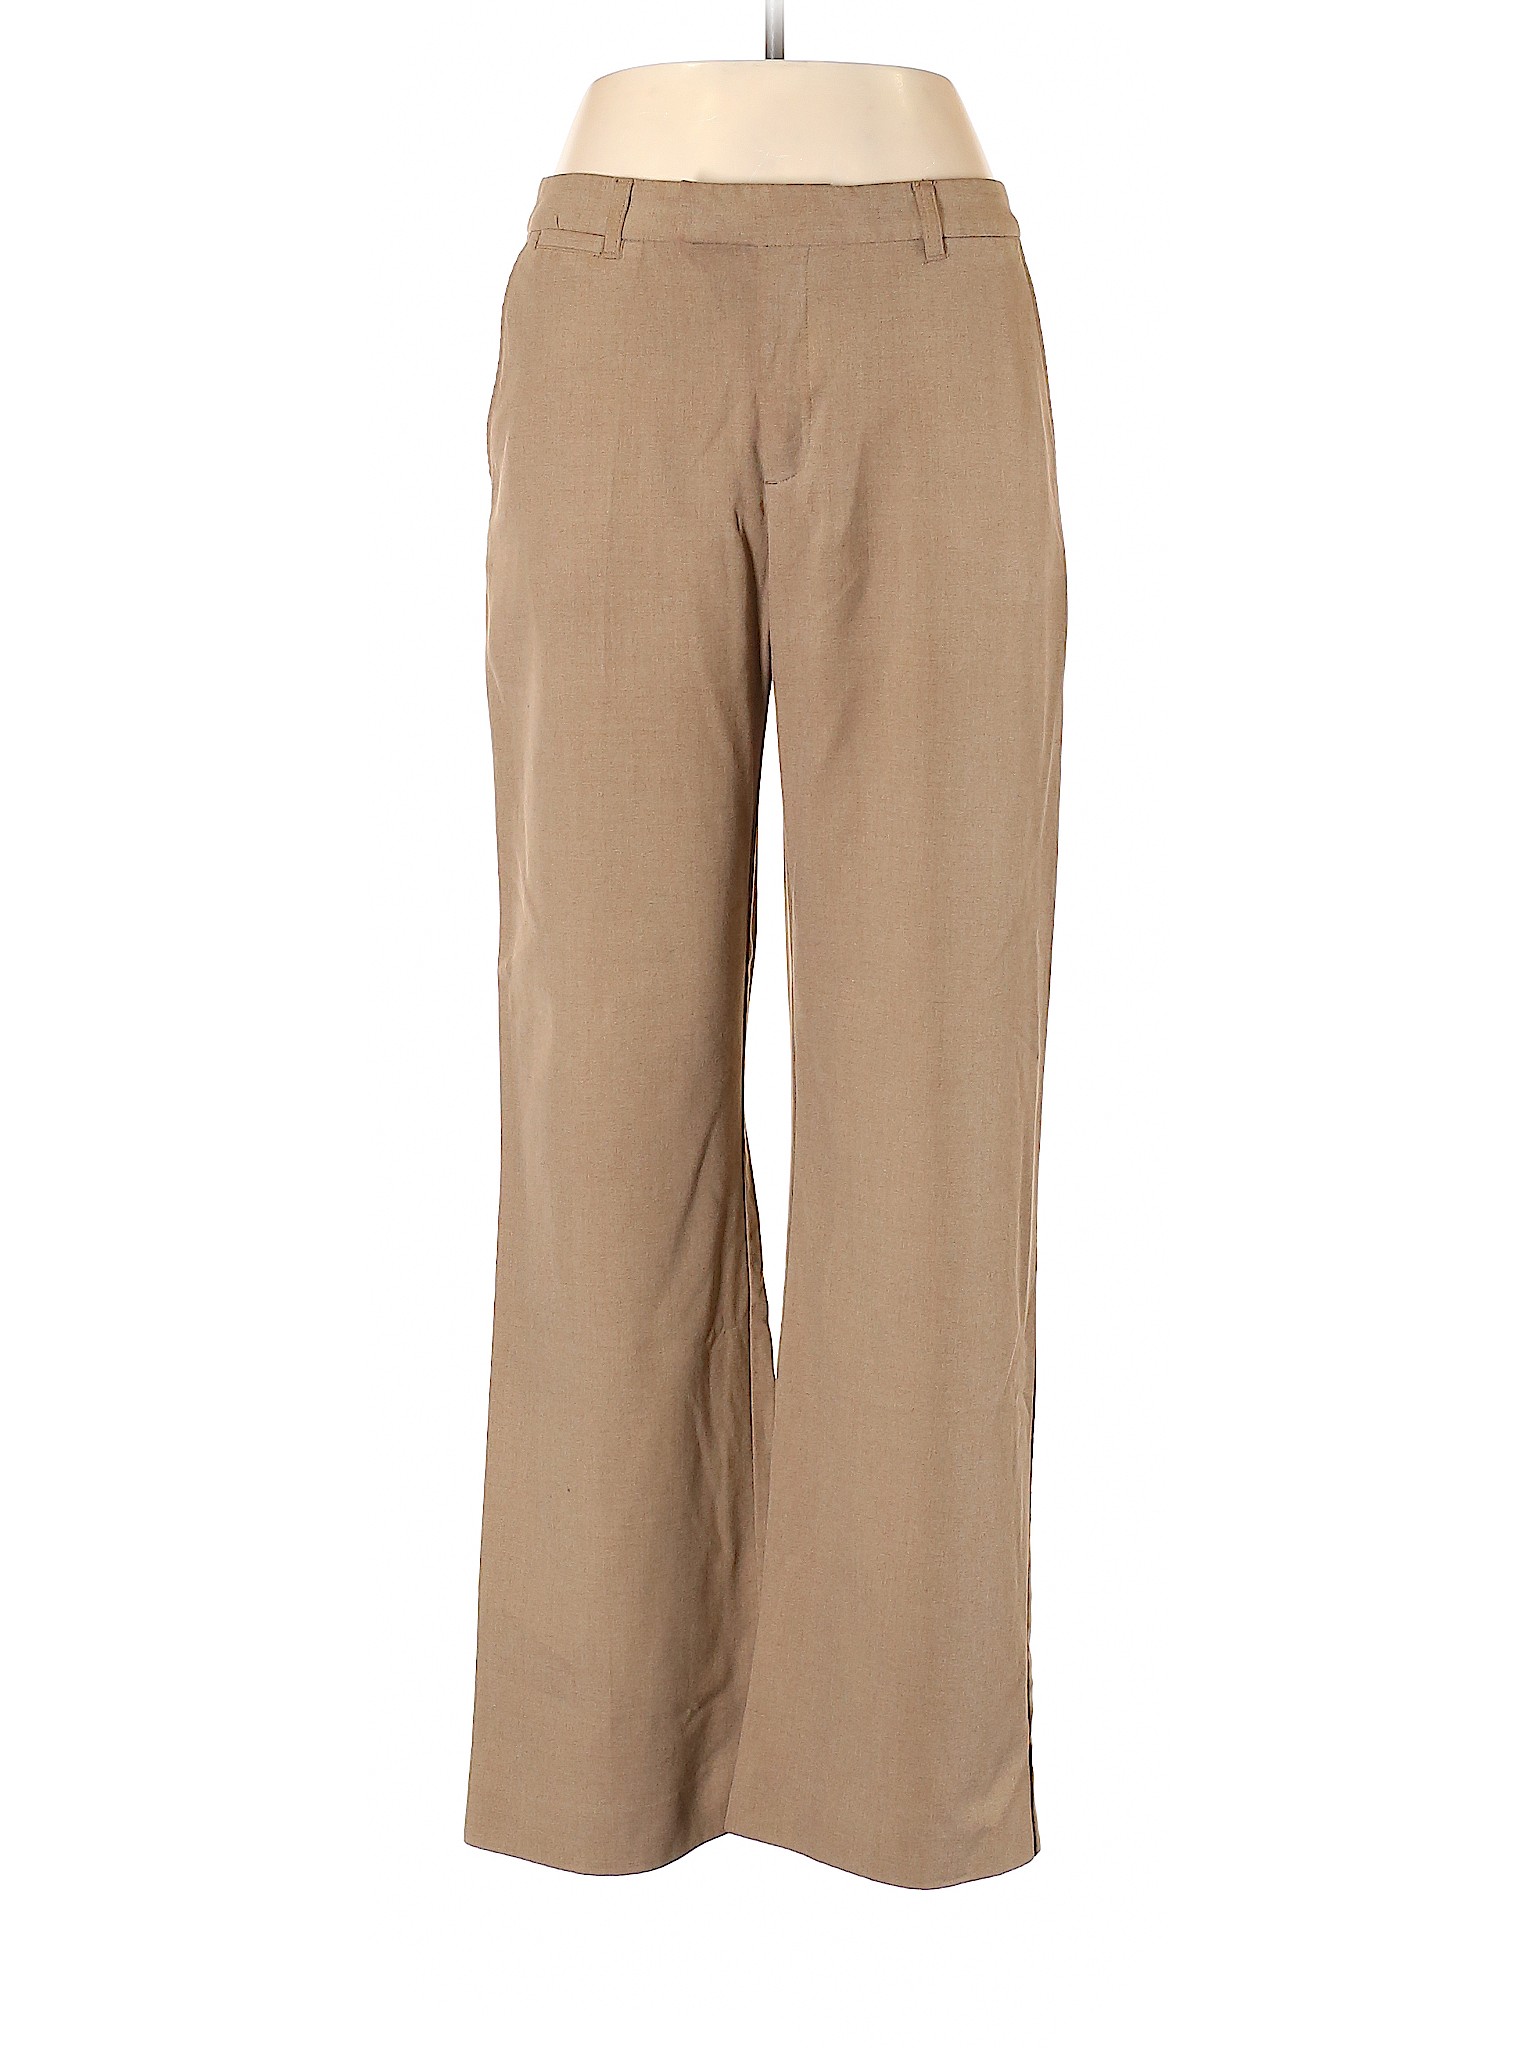 Old Navy Women Brown Dress Pants 10 | eBay